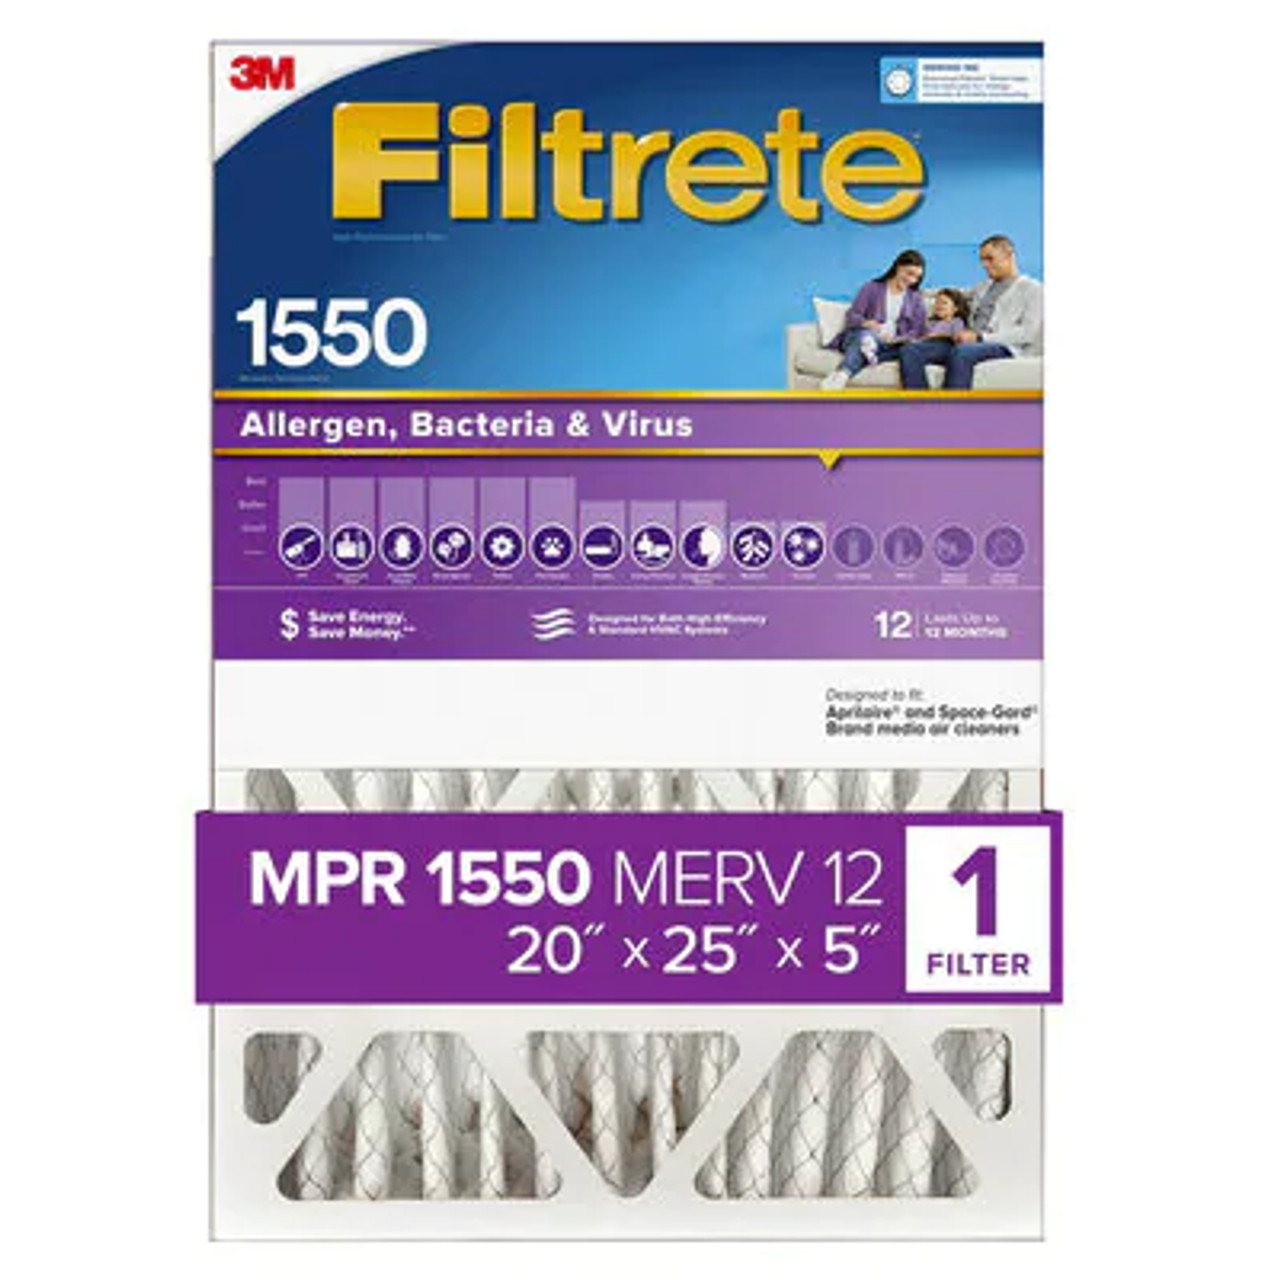 Filtrete™ Ultra Allergen Reduction Deep Pleat Filter NDP03-5IN-2, 20 in x 25 in x 5 in